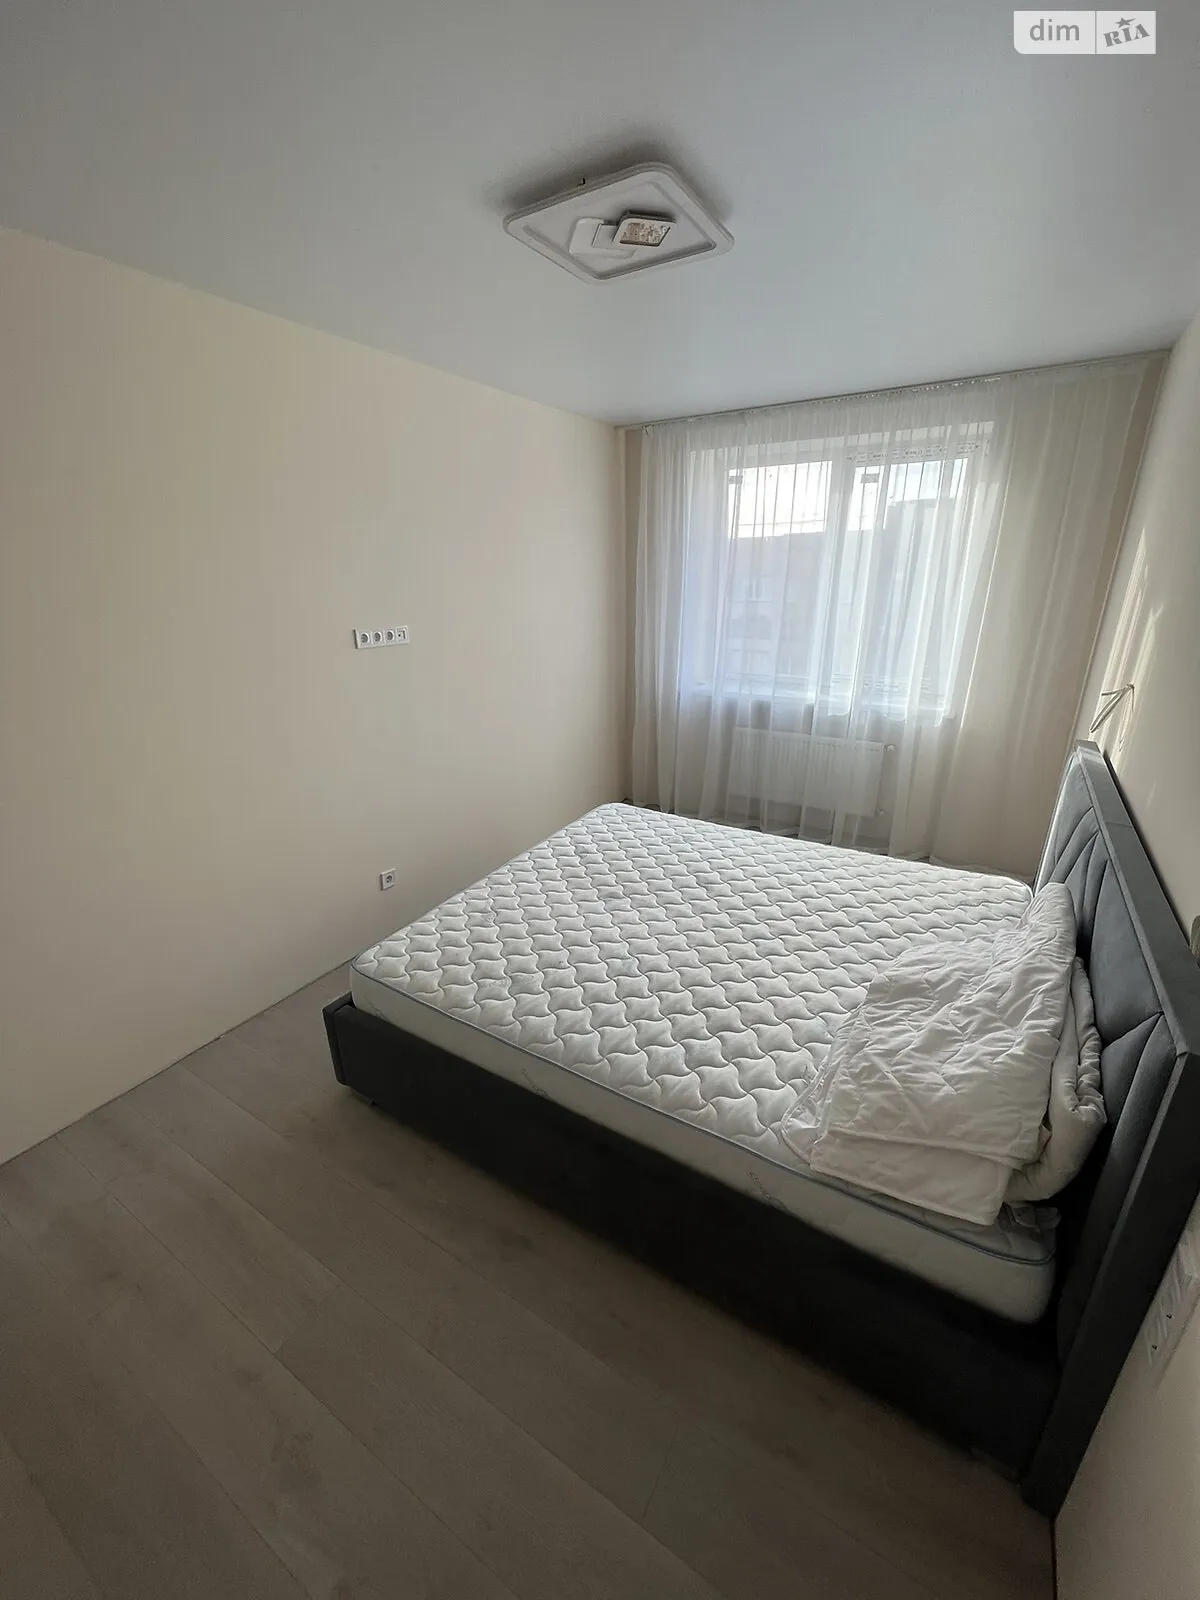 Продается 2-комнатная квартира 70 кв. м в Львове, ул. Антонича, 5Б - фото 1